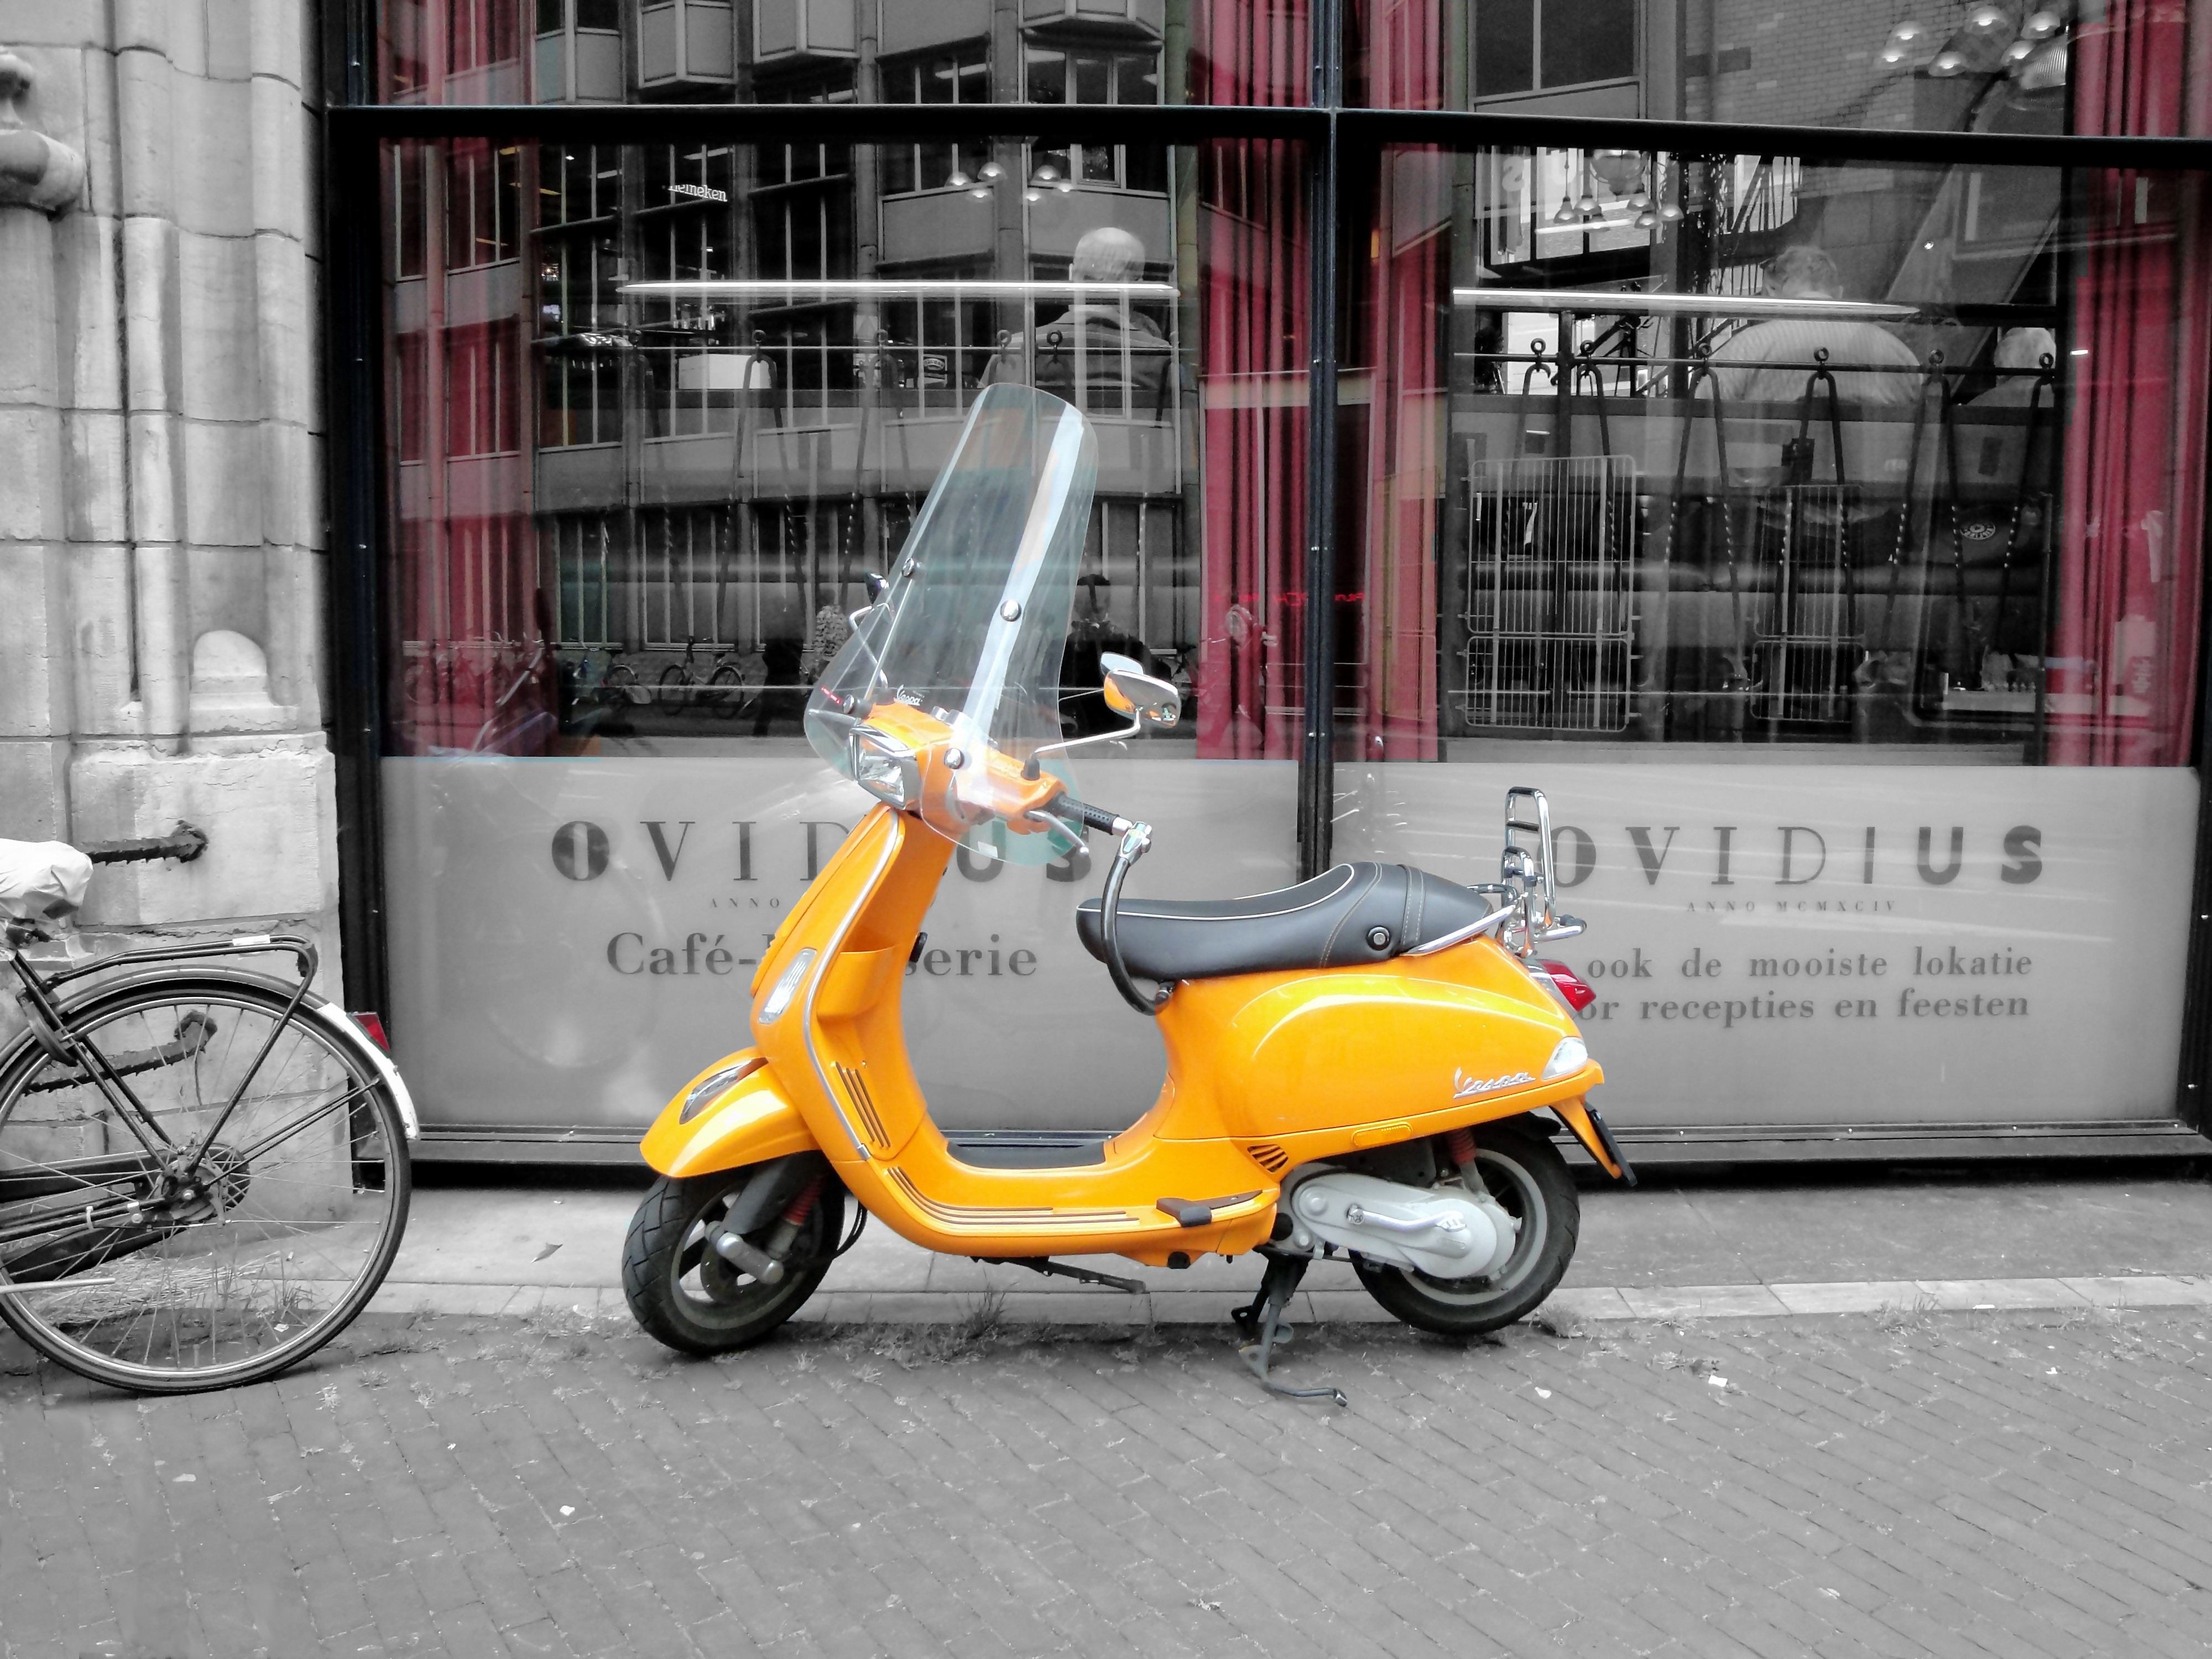 General 4000x3000 vehicle scooters urban yellow street Vespa Italian motorcycles